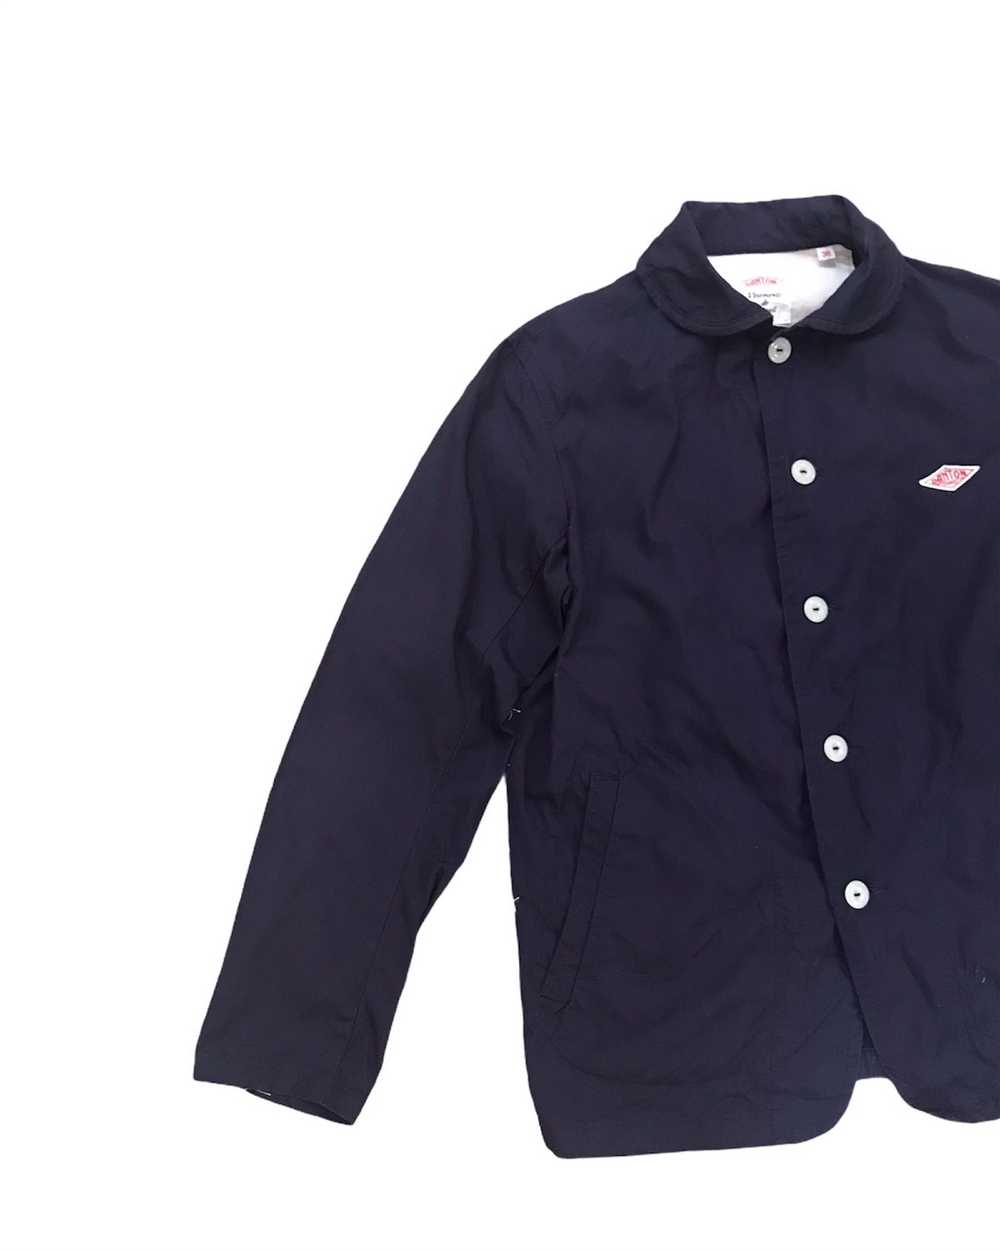 Danton Danton jacket size 36 made in Japan - image 4